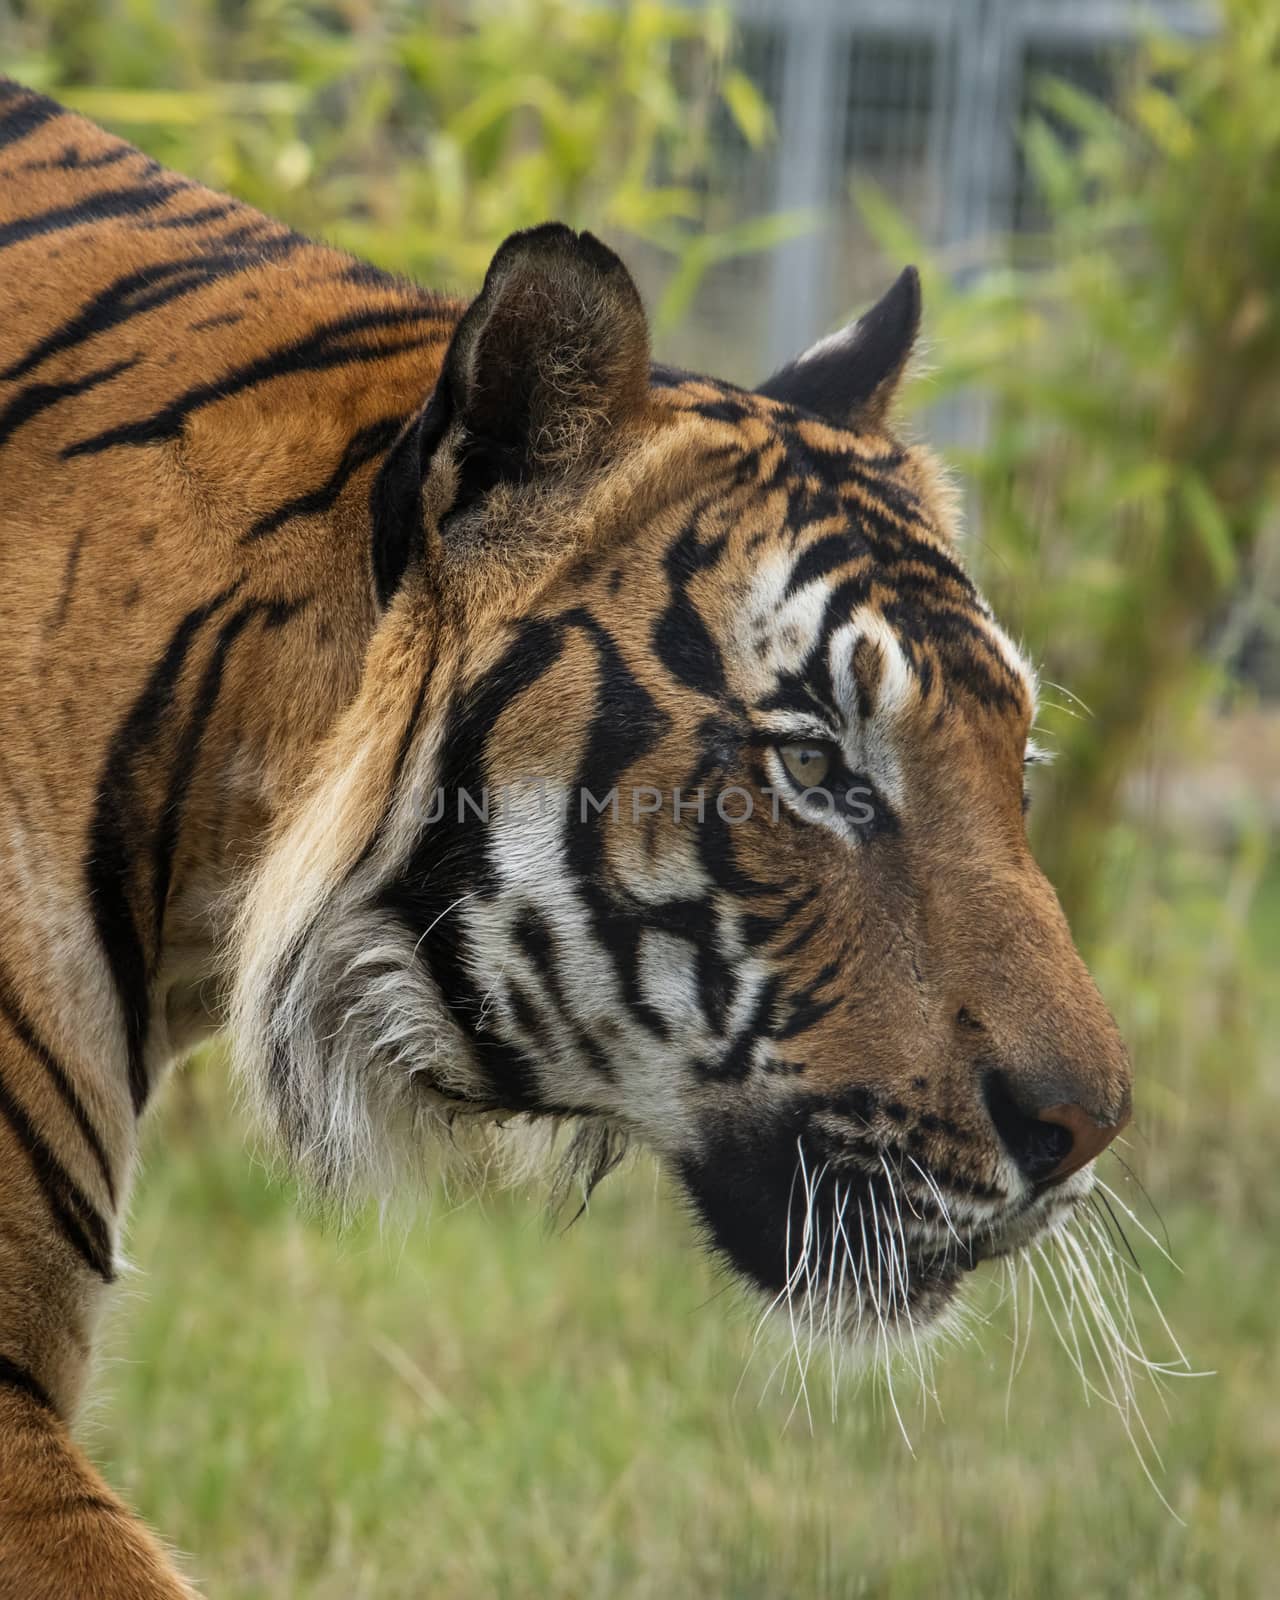 UK, Hamerton Zoo - August 2018: Male malaysian tiger in captivity - Portrait